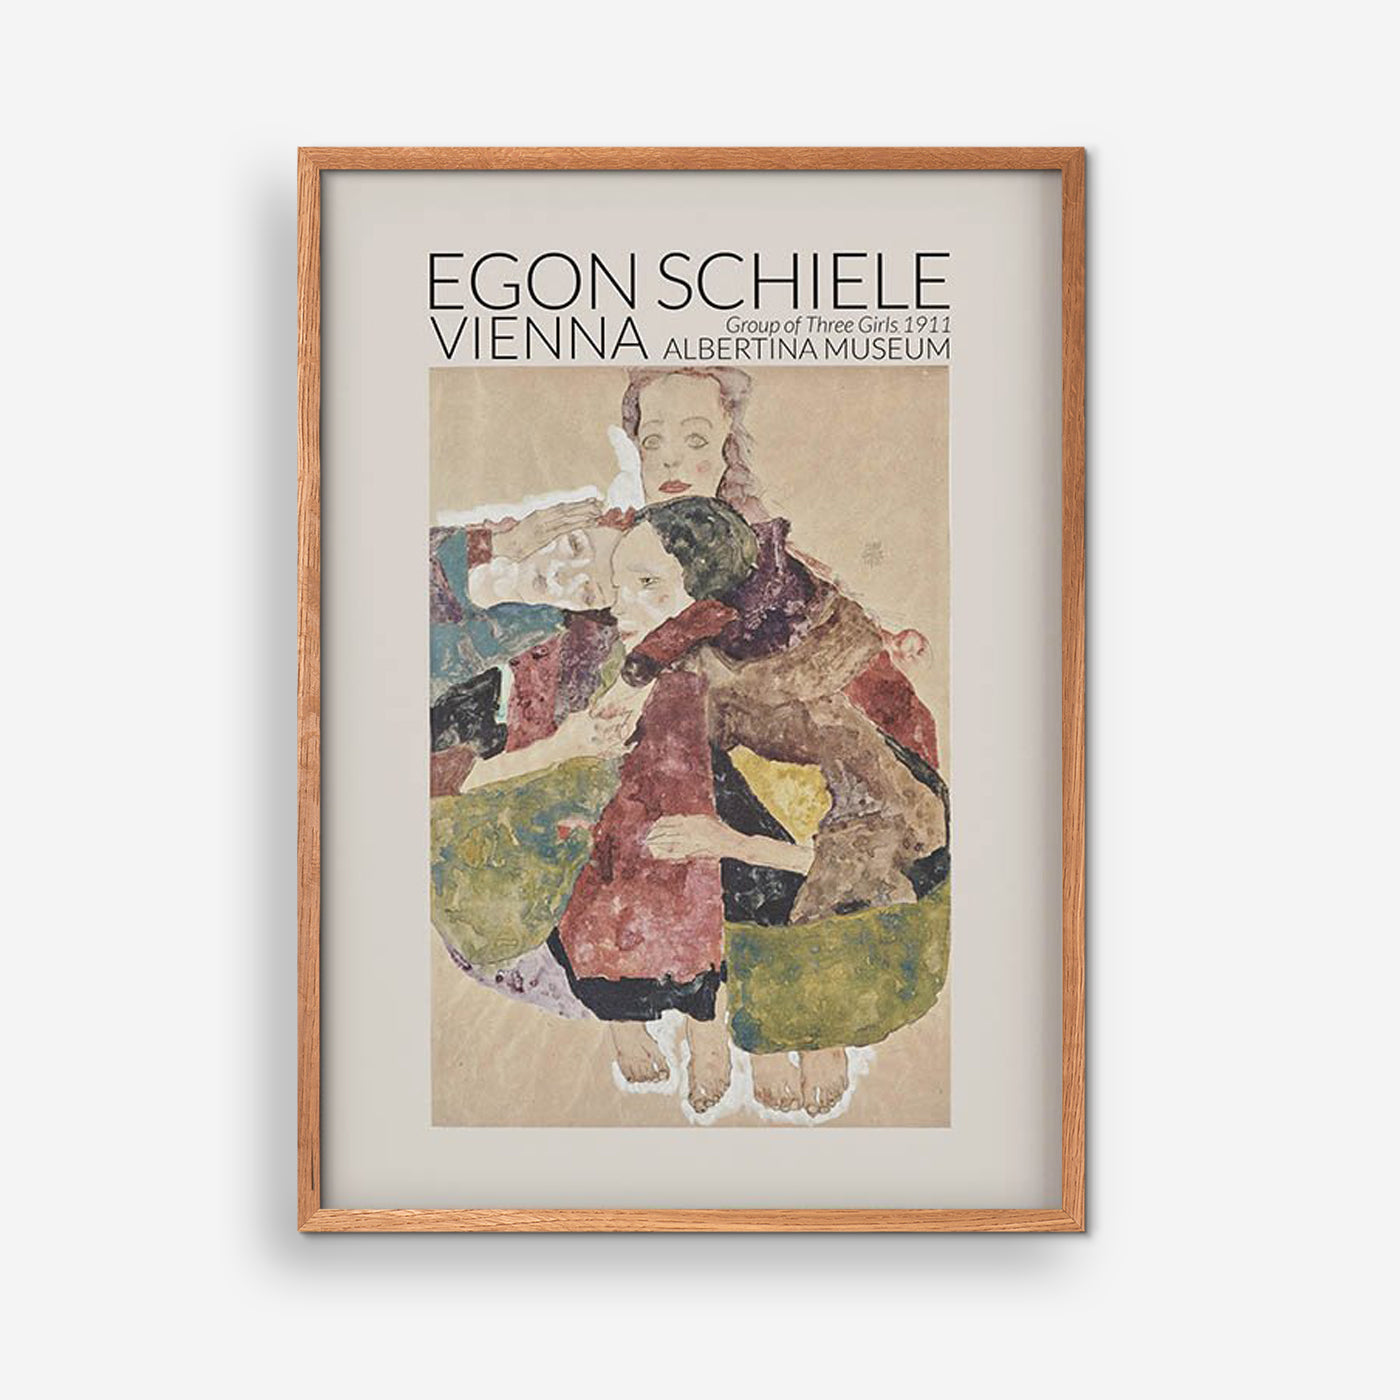 Three Girls - Egon Schiele